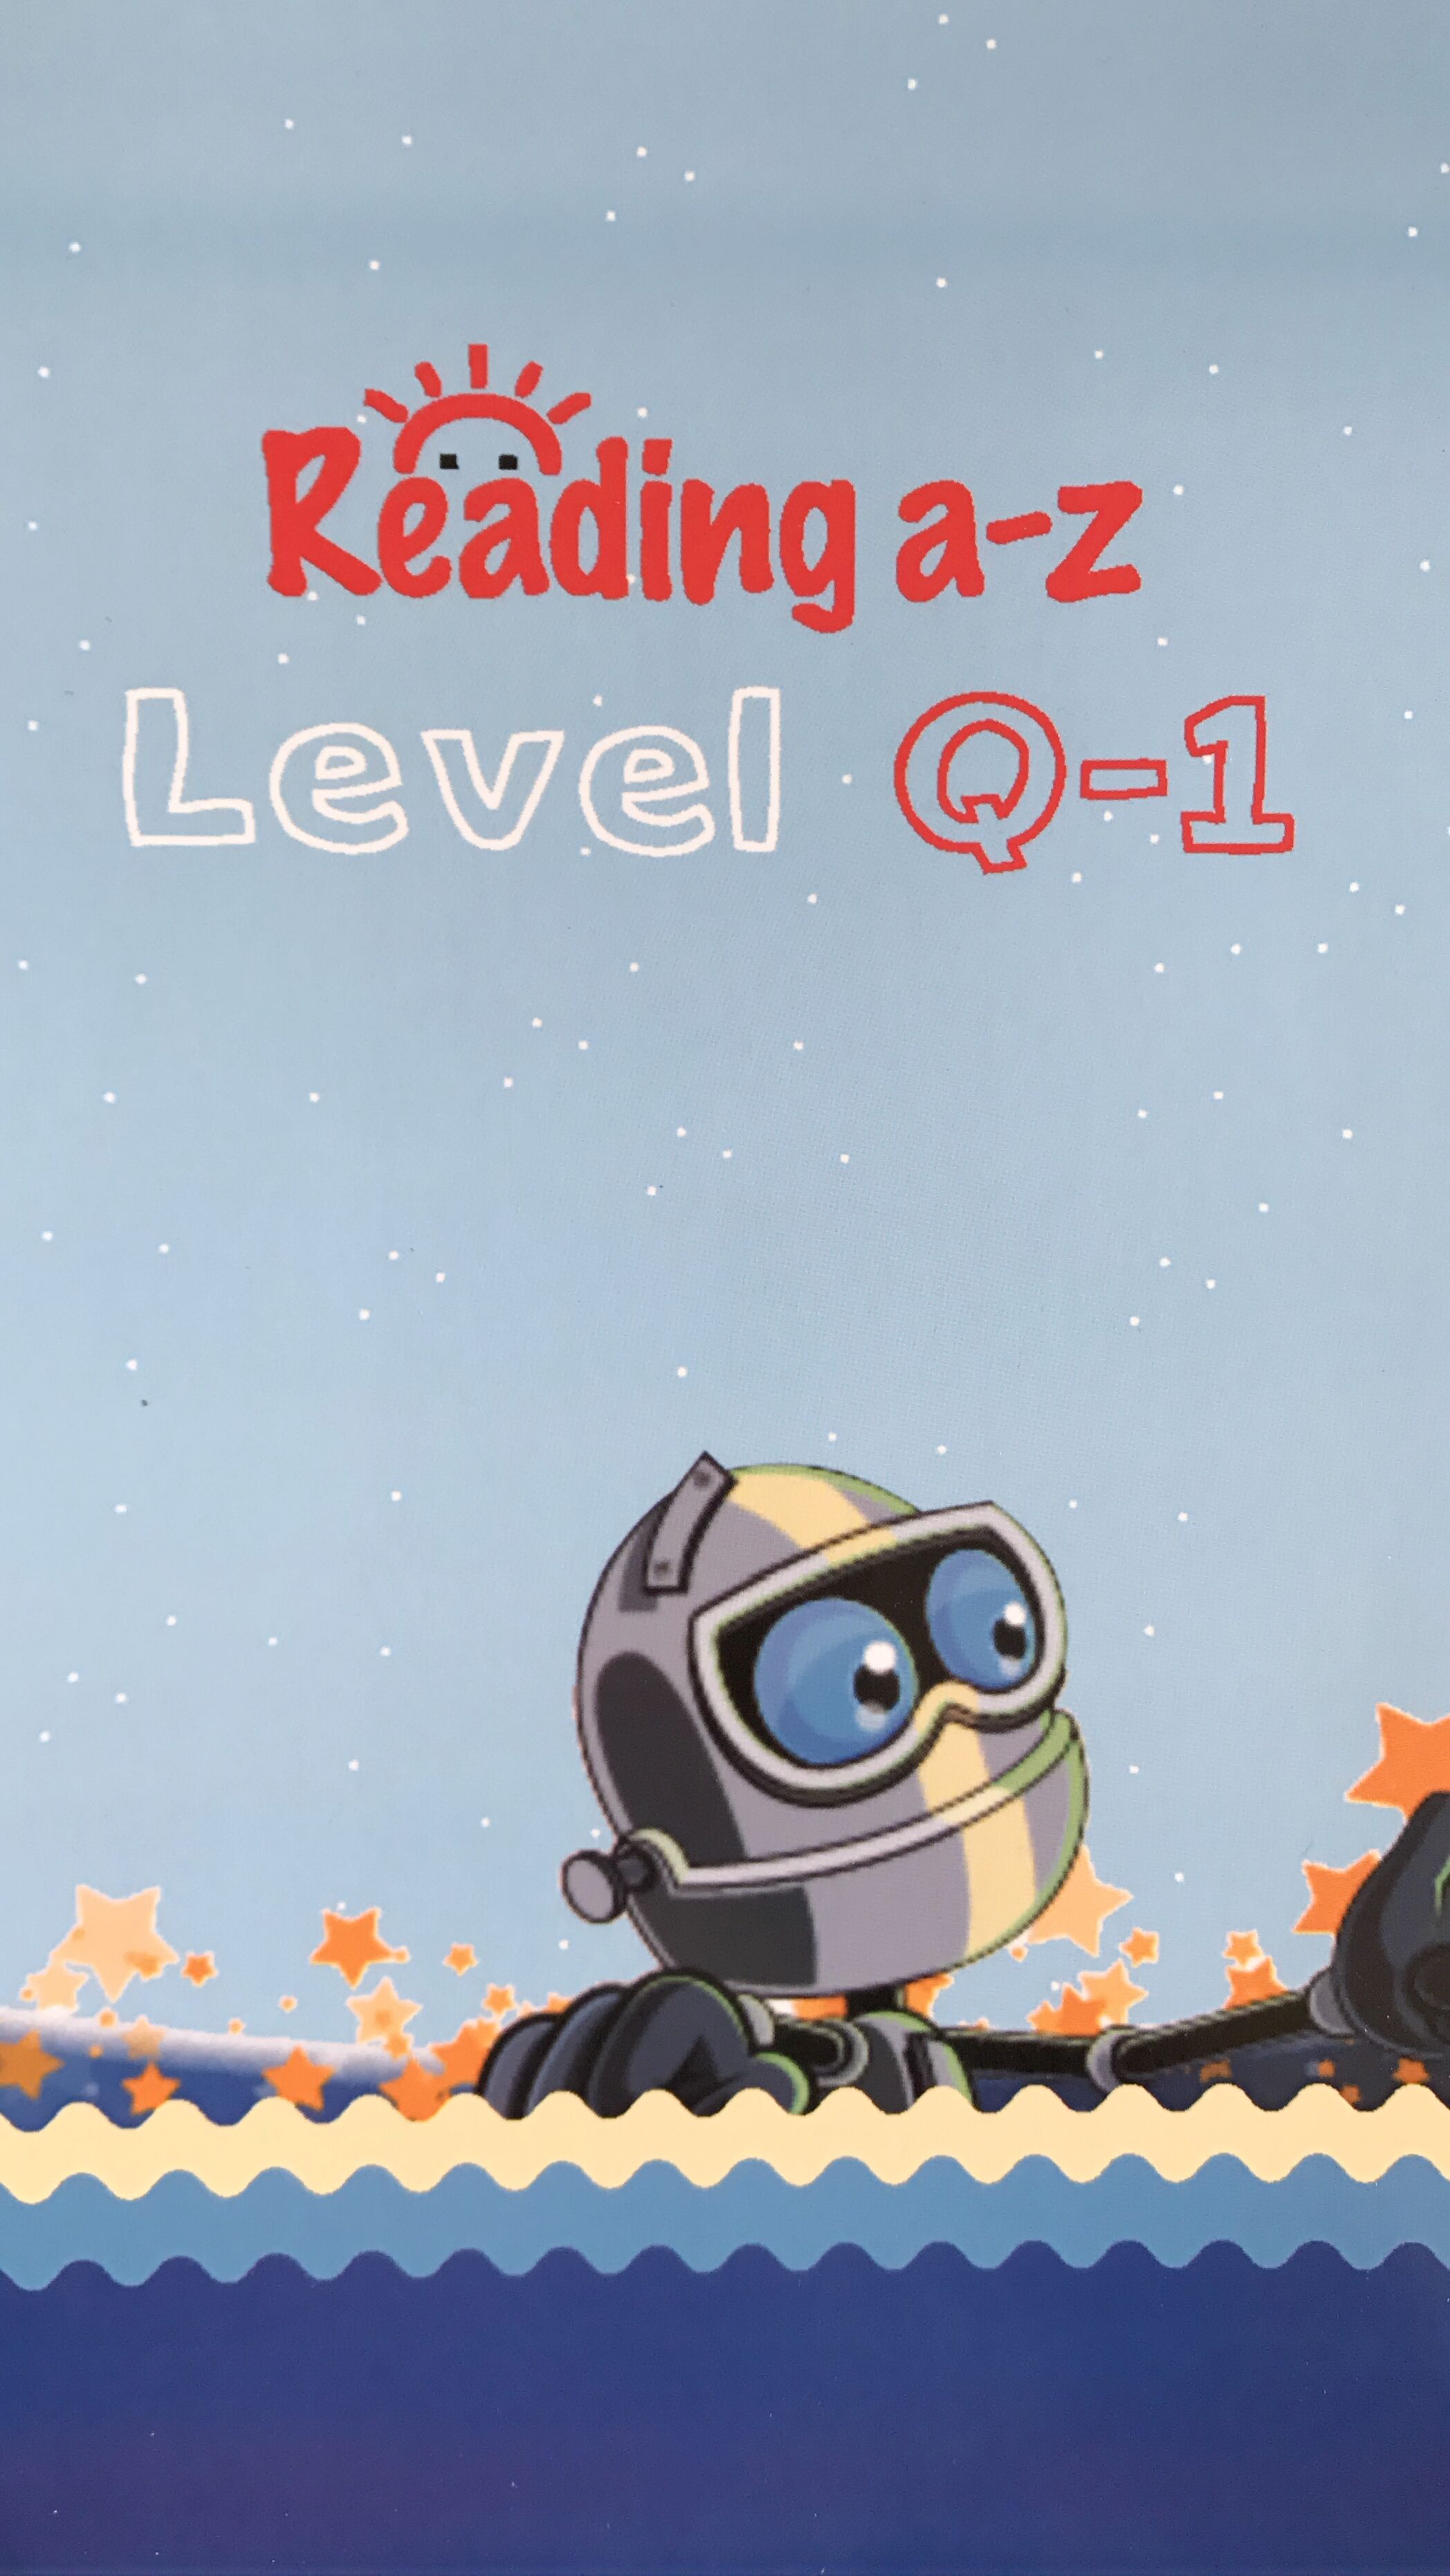 Reading A-Z Level Q-1